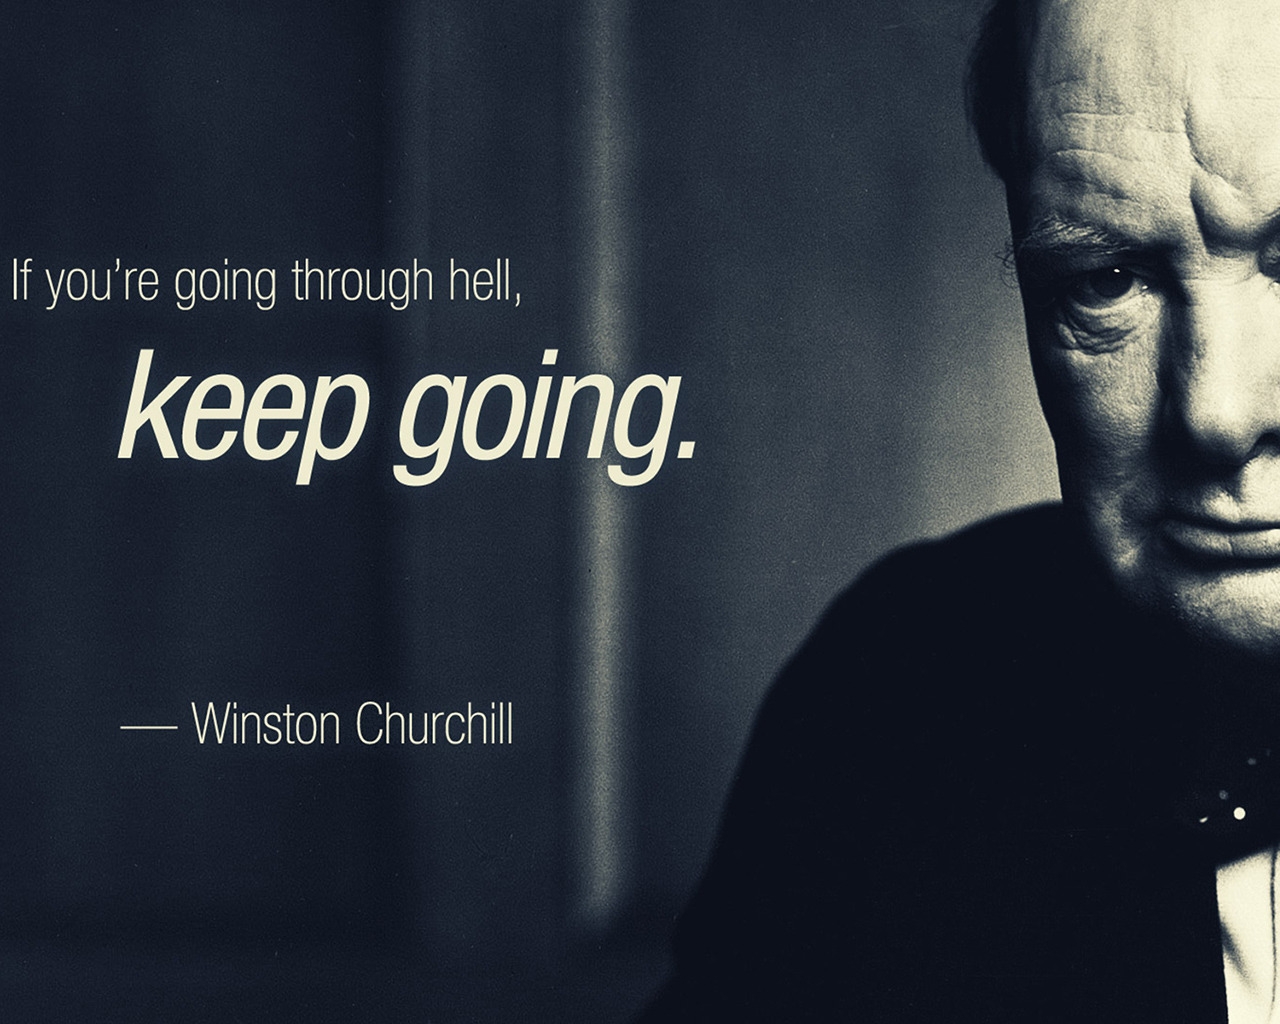 Winston Churchill Quote for 1280 x 1024 resolution